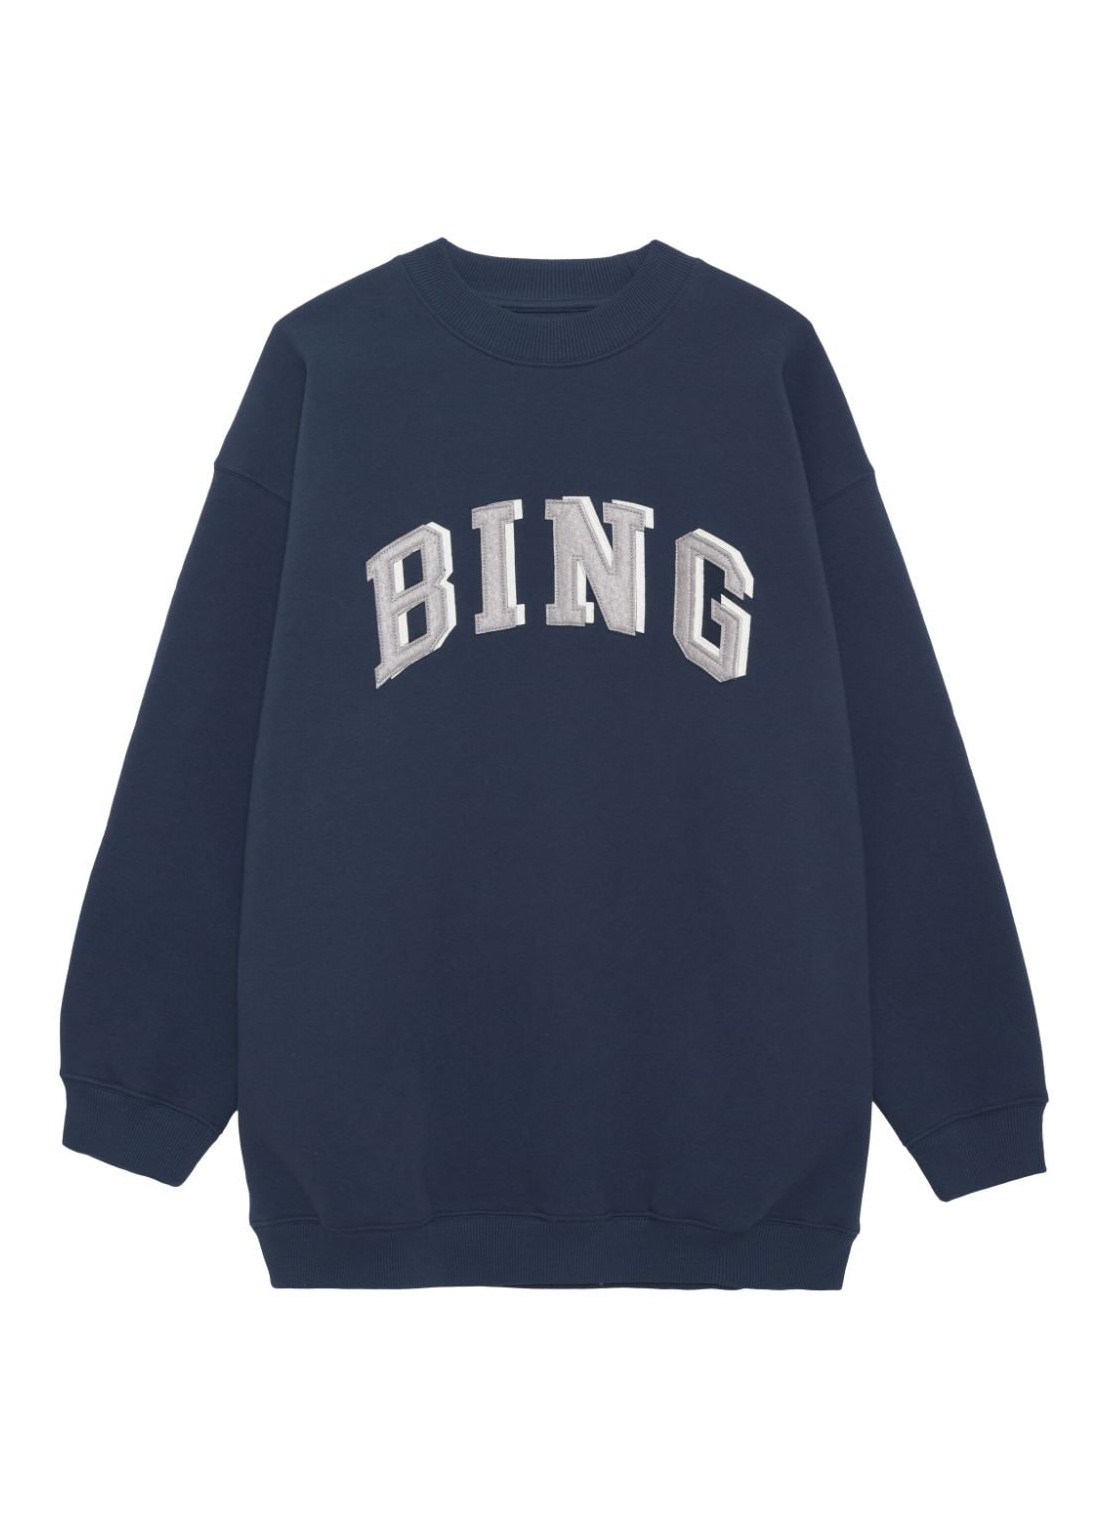 Sudadera anine bing sweater woman tyler sweatshirt bing a085205420 navy talla M
 